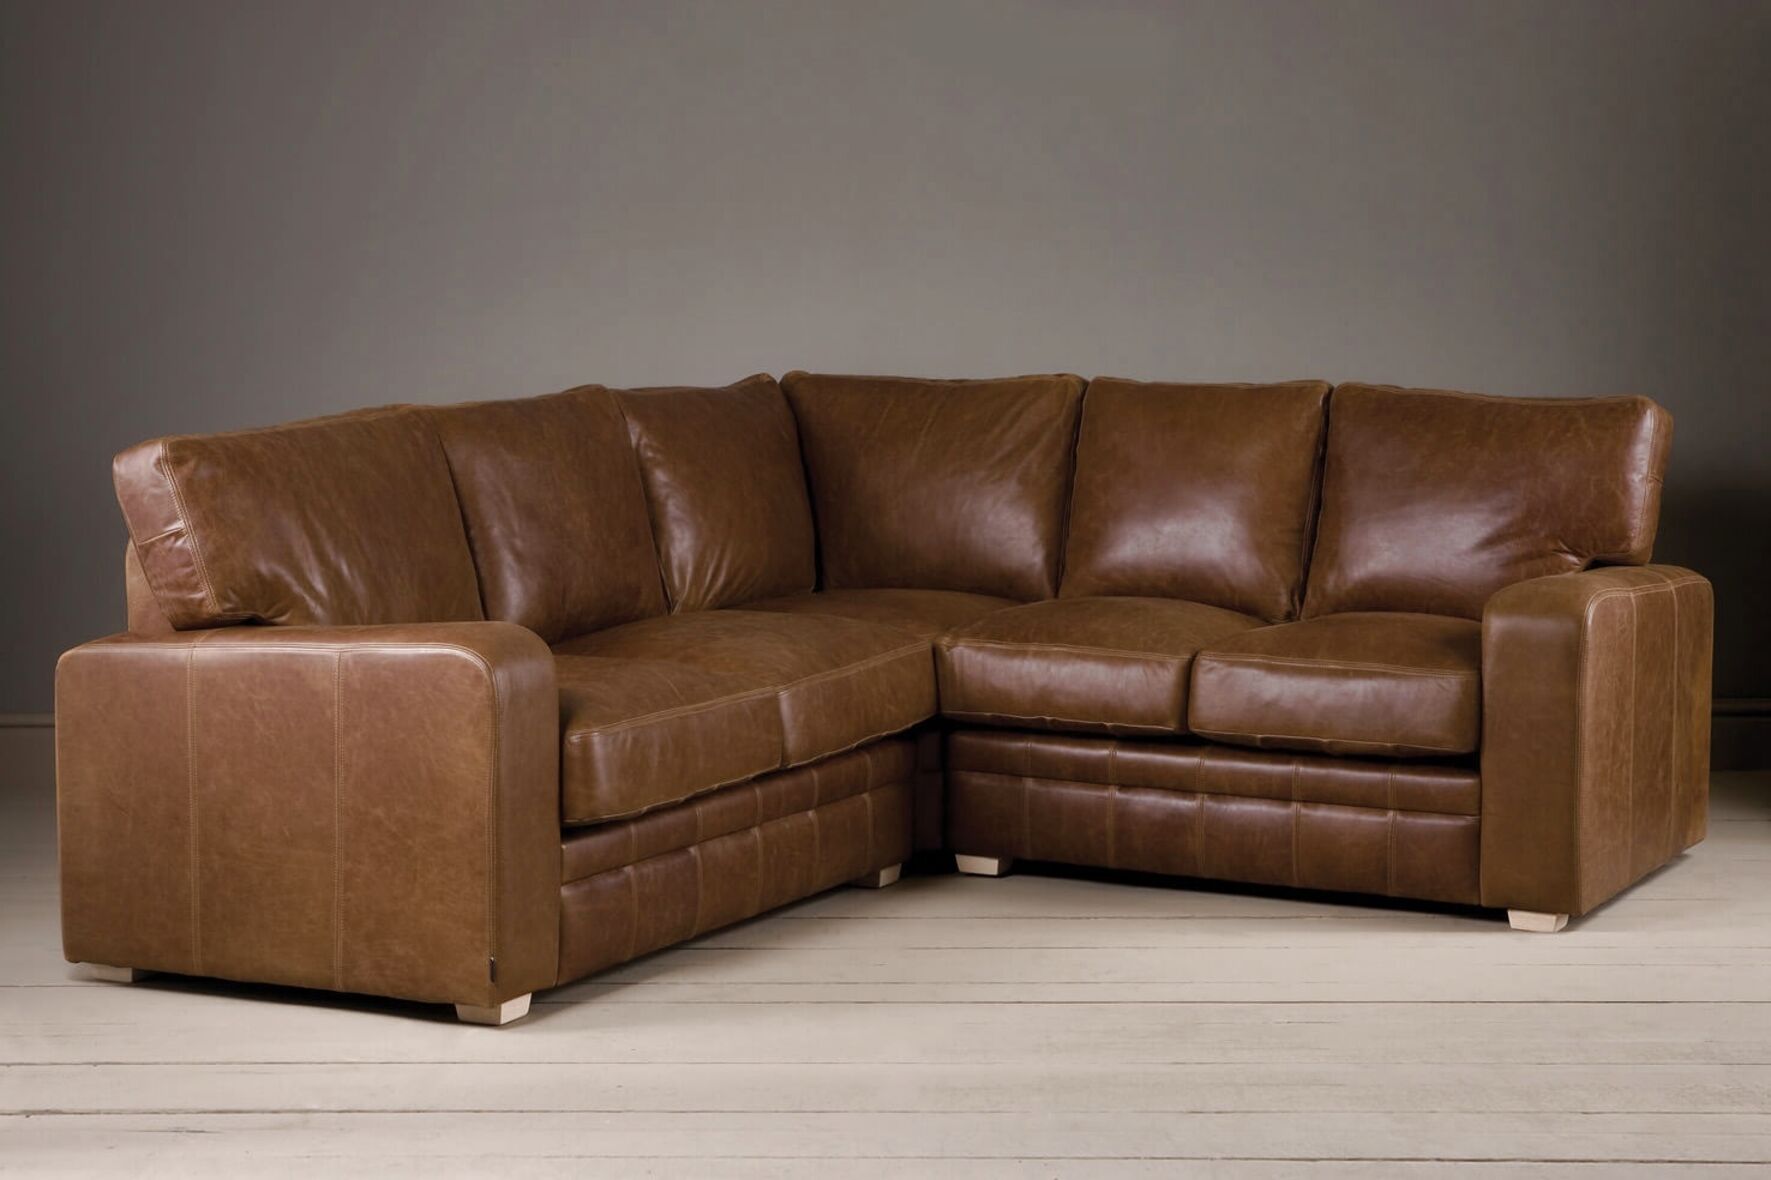 used leather sofa uk